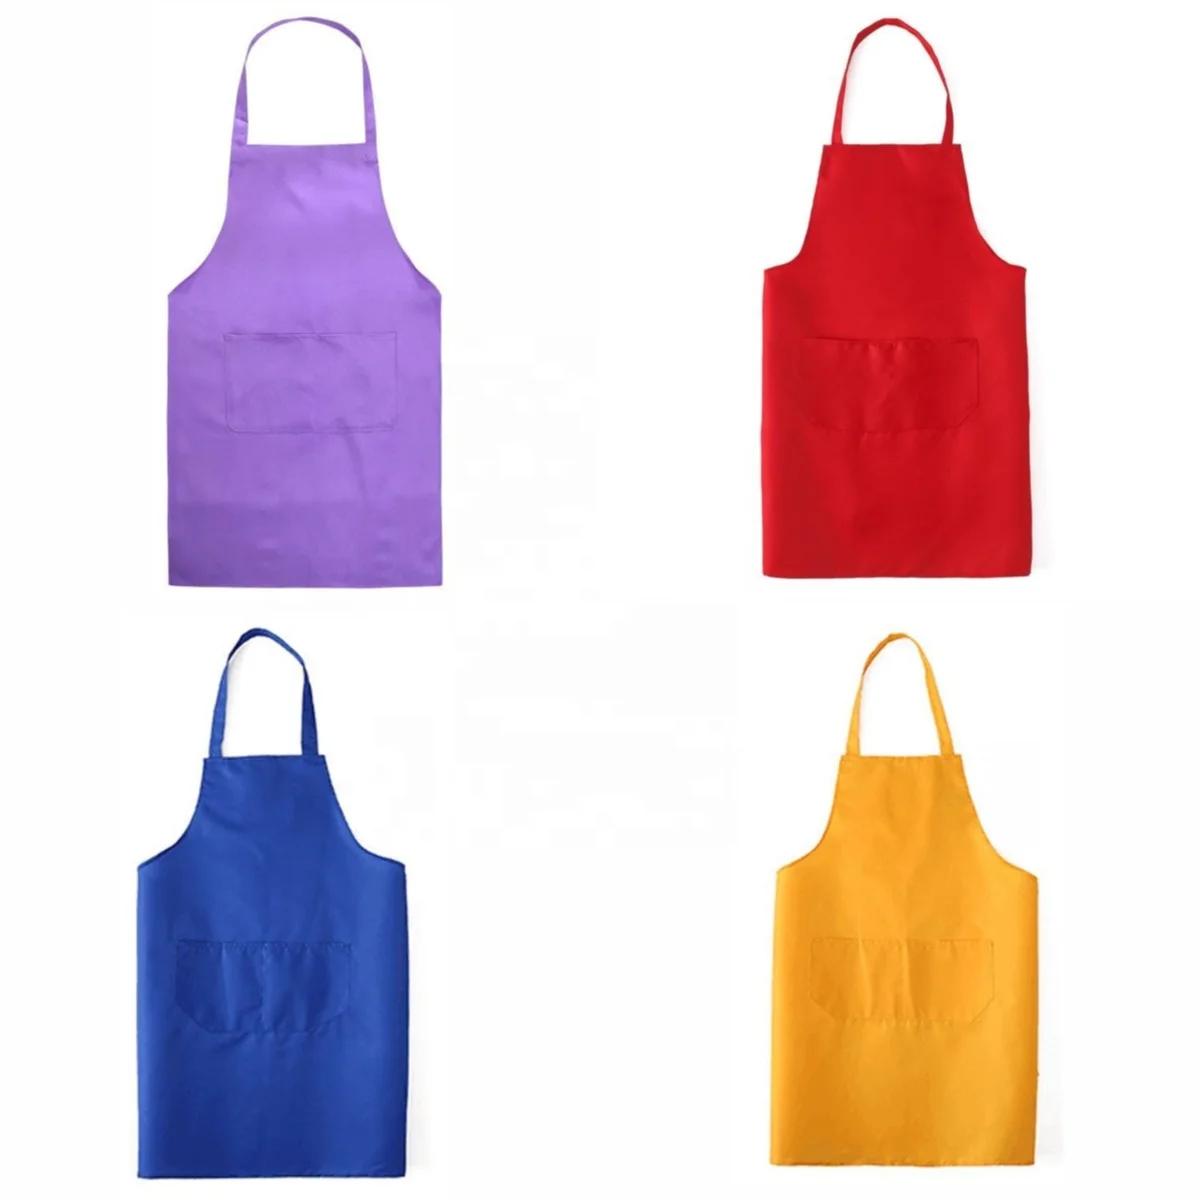 Factory Manufacturer customized plain kitchen aprons bib wholesale blank chef apron printed logo in cotton 2-pocket